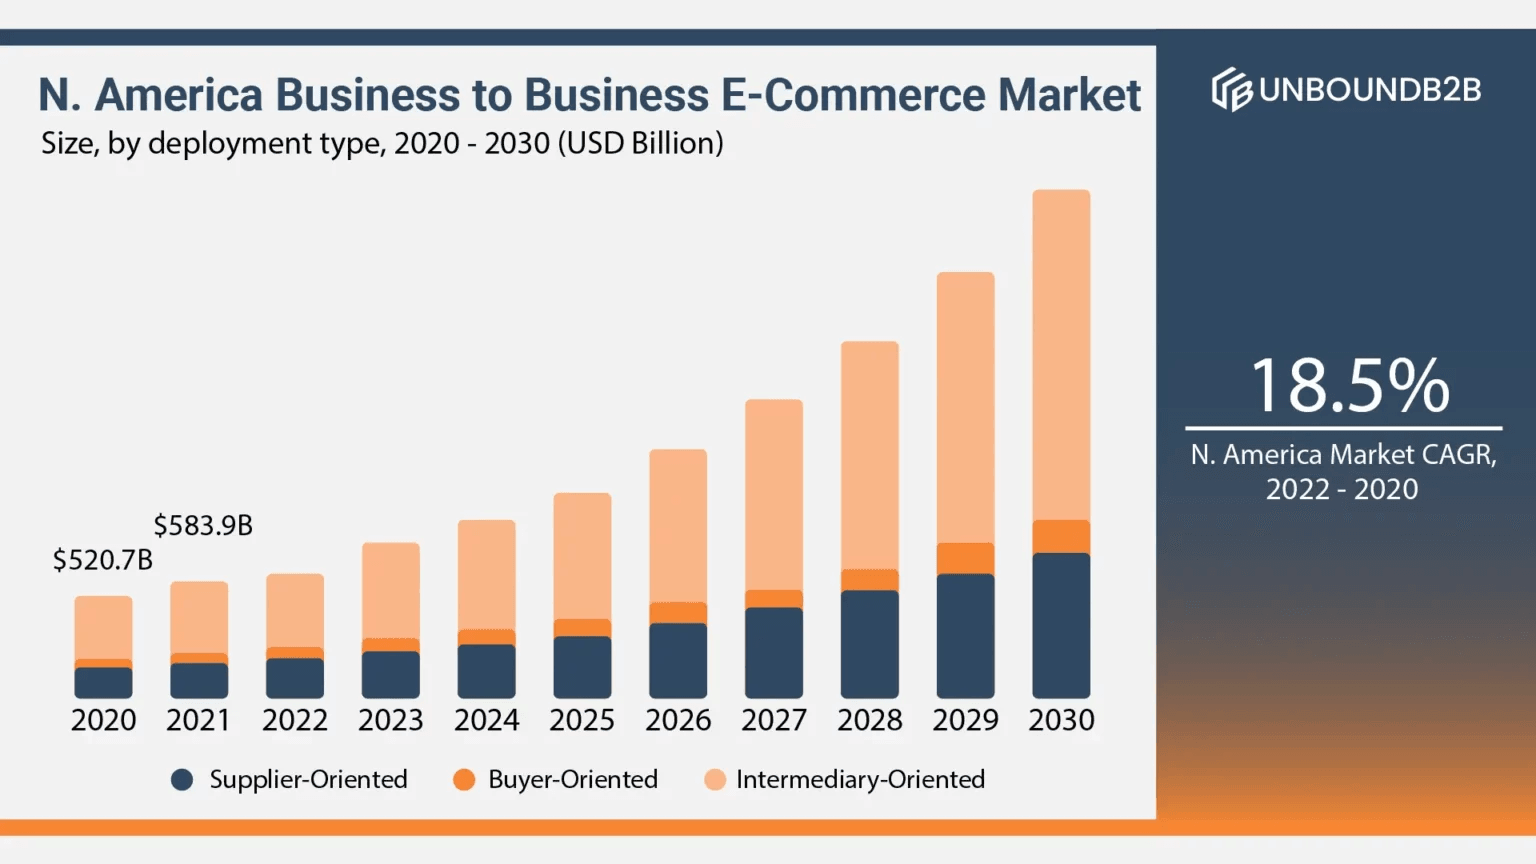 N. America B2B E-commerce market 